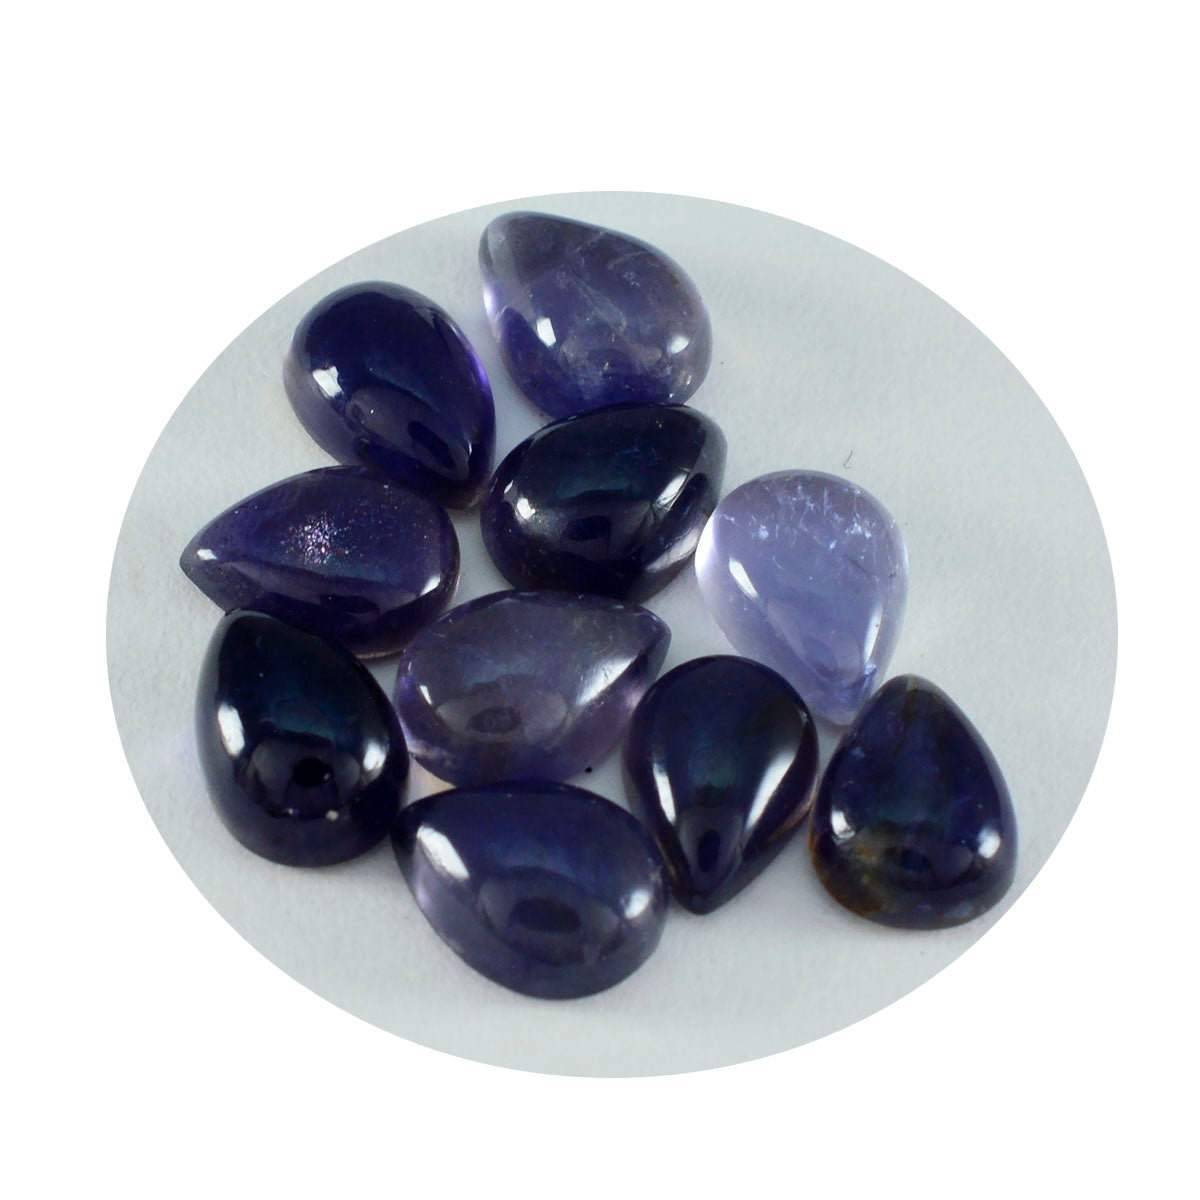 Riyogems 1PC Blue Iolite Cabochon 12x16 mm Pear Shape amazing Quality Loose Gemstone